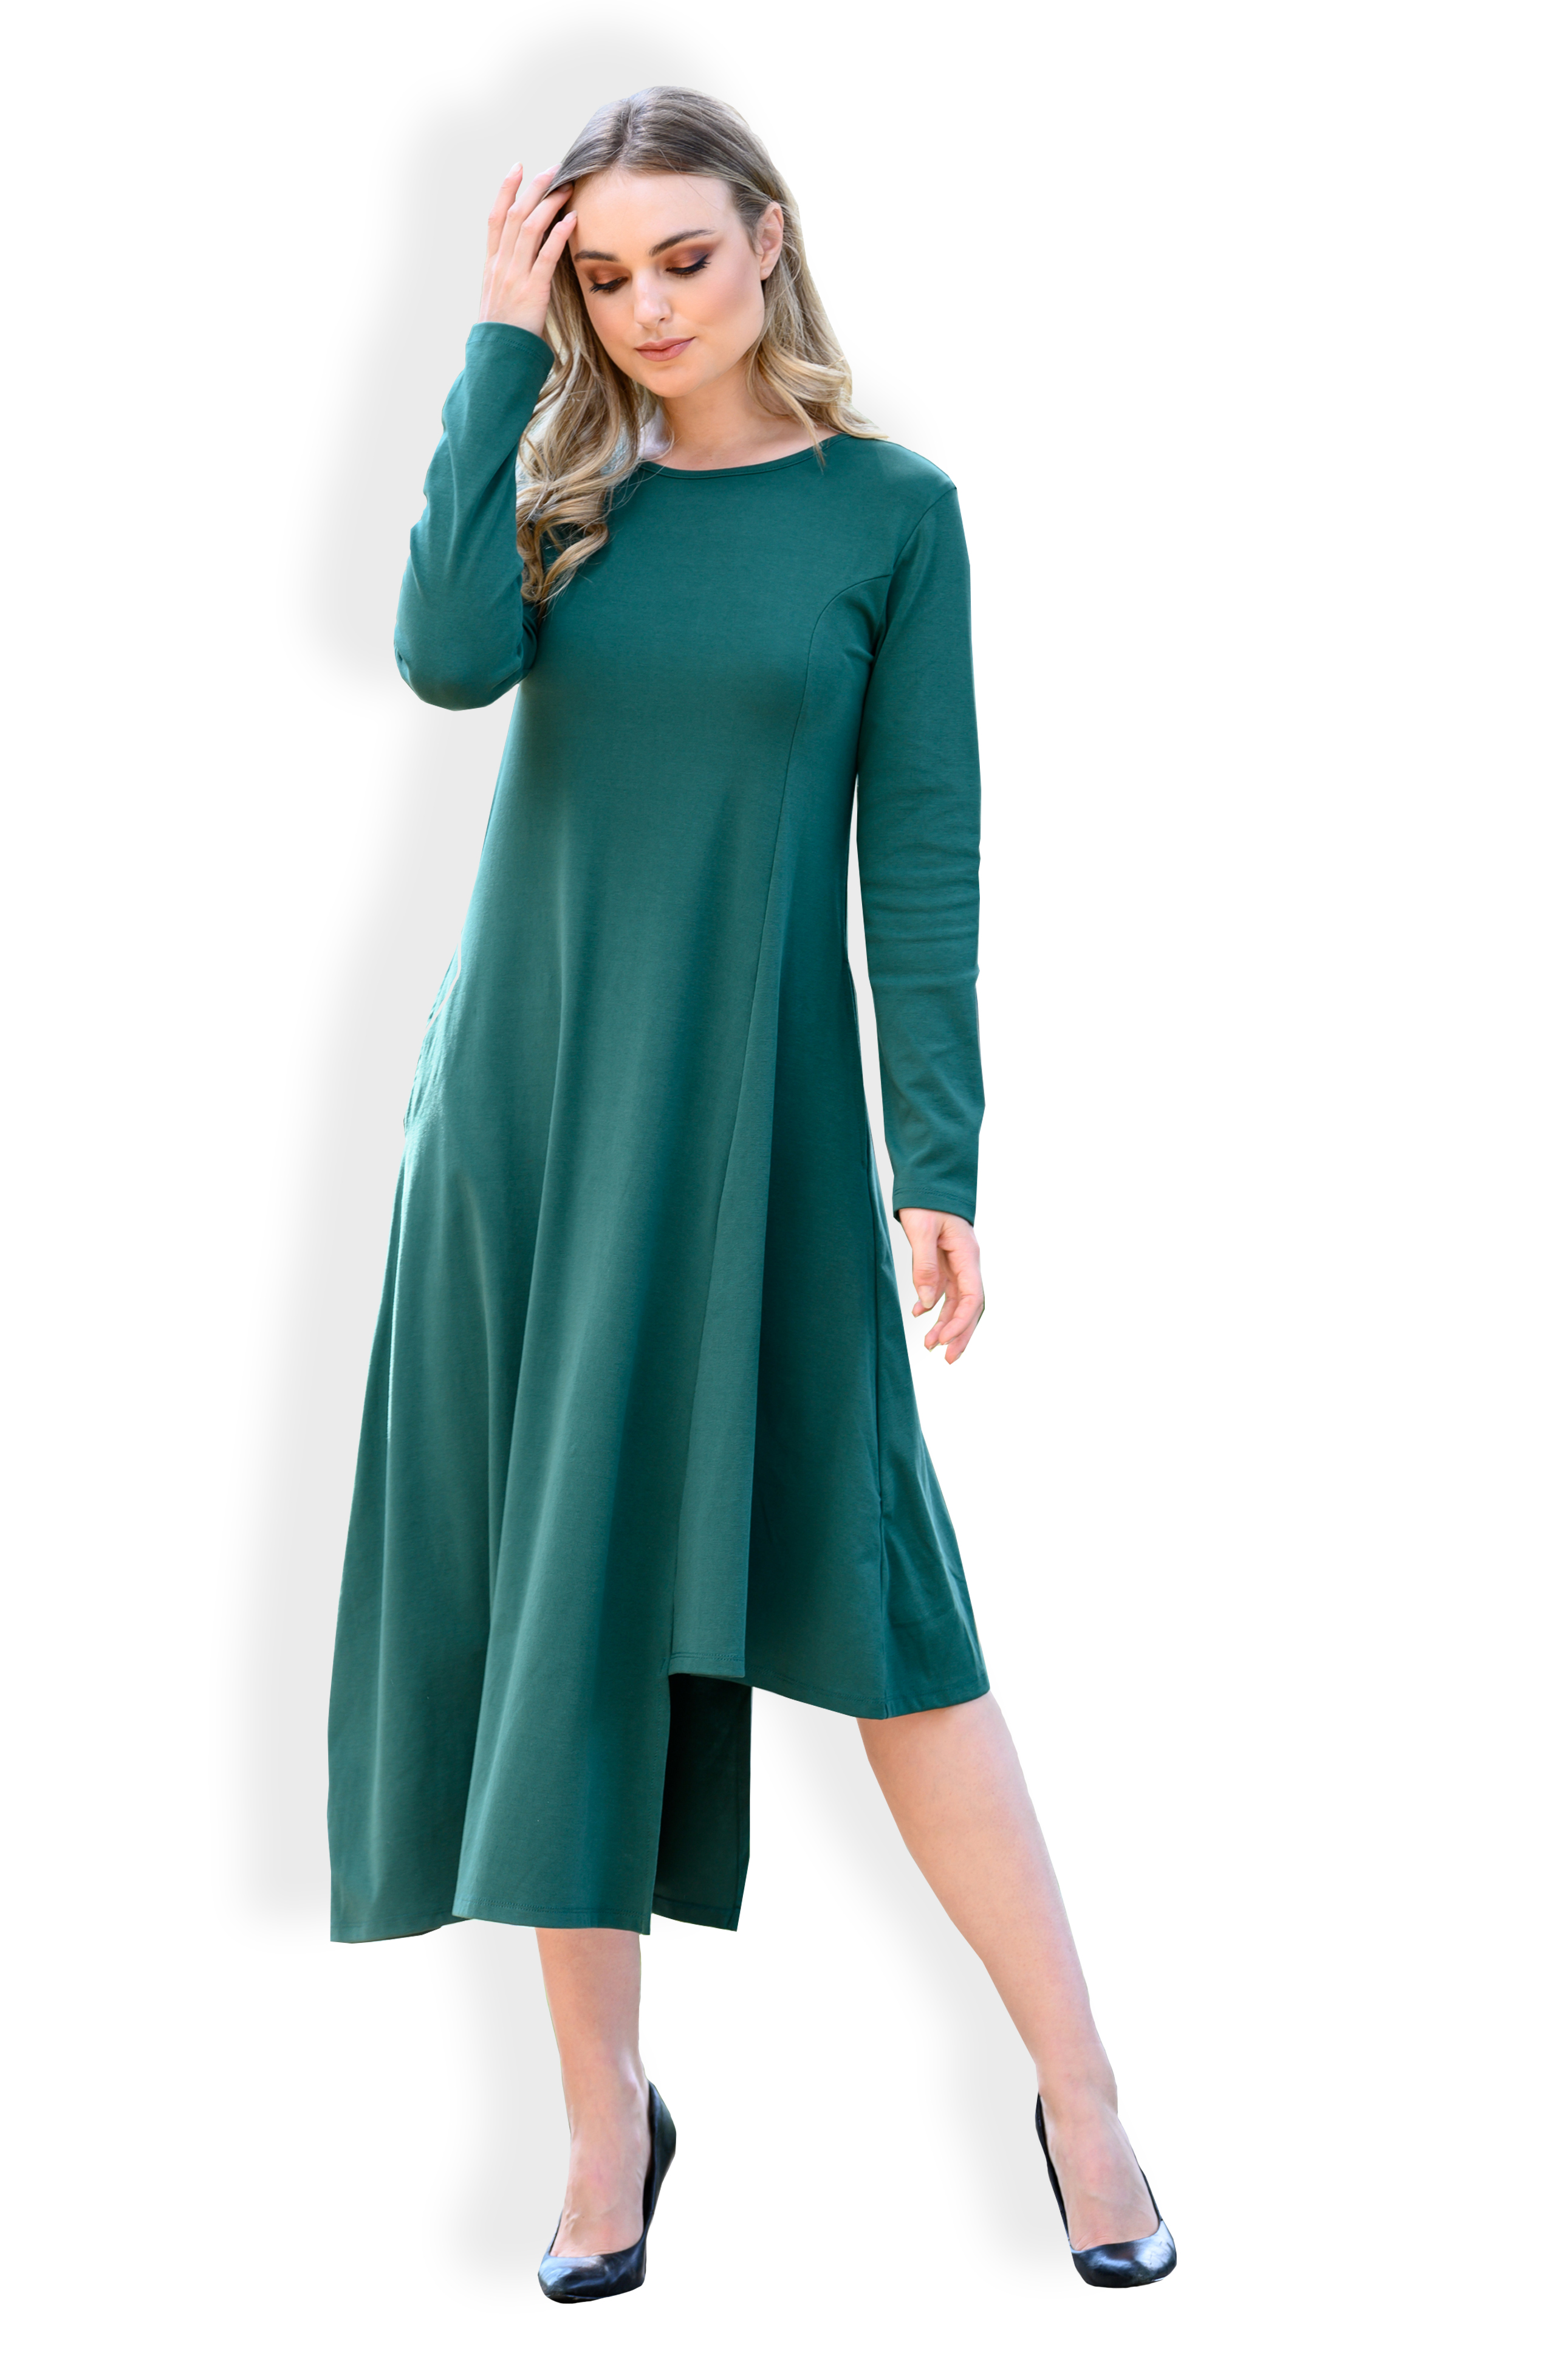 MASTIK EMERALD GREEN STEP HEM DRESS | Rosella - Style inspired by elegance